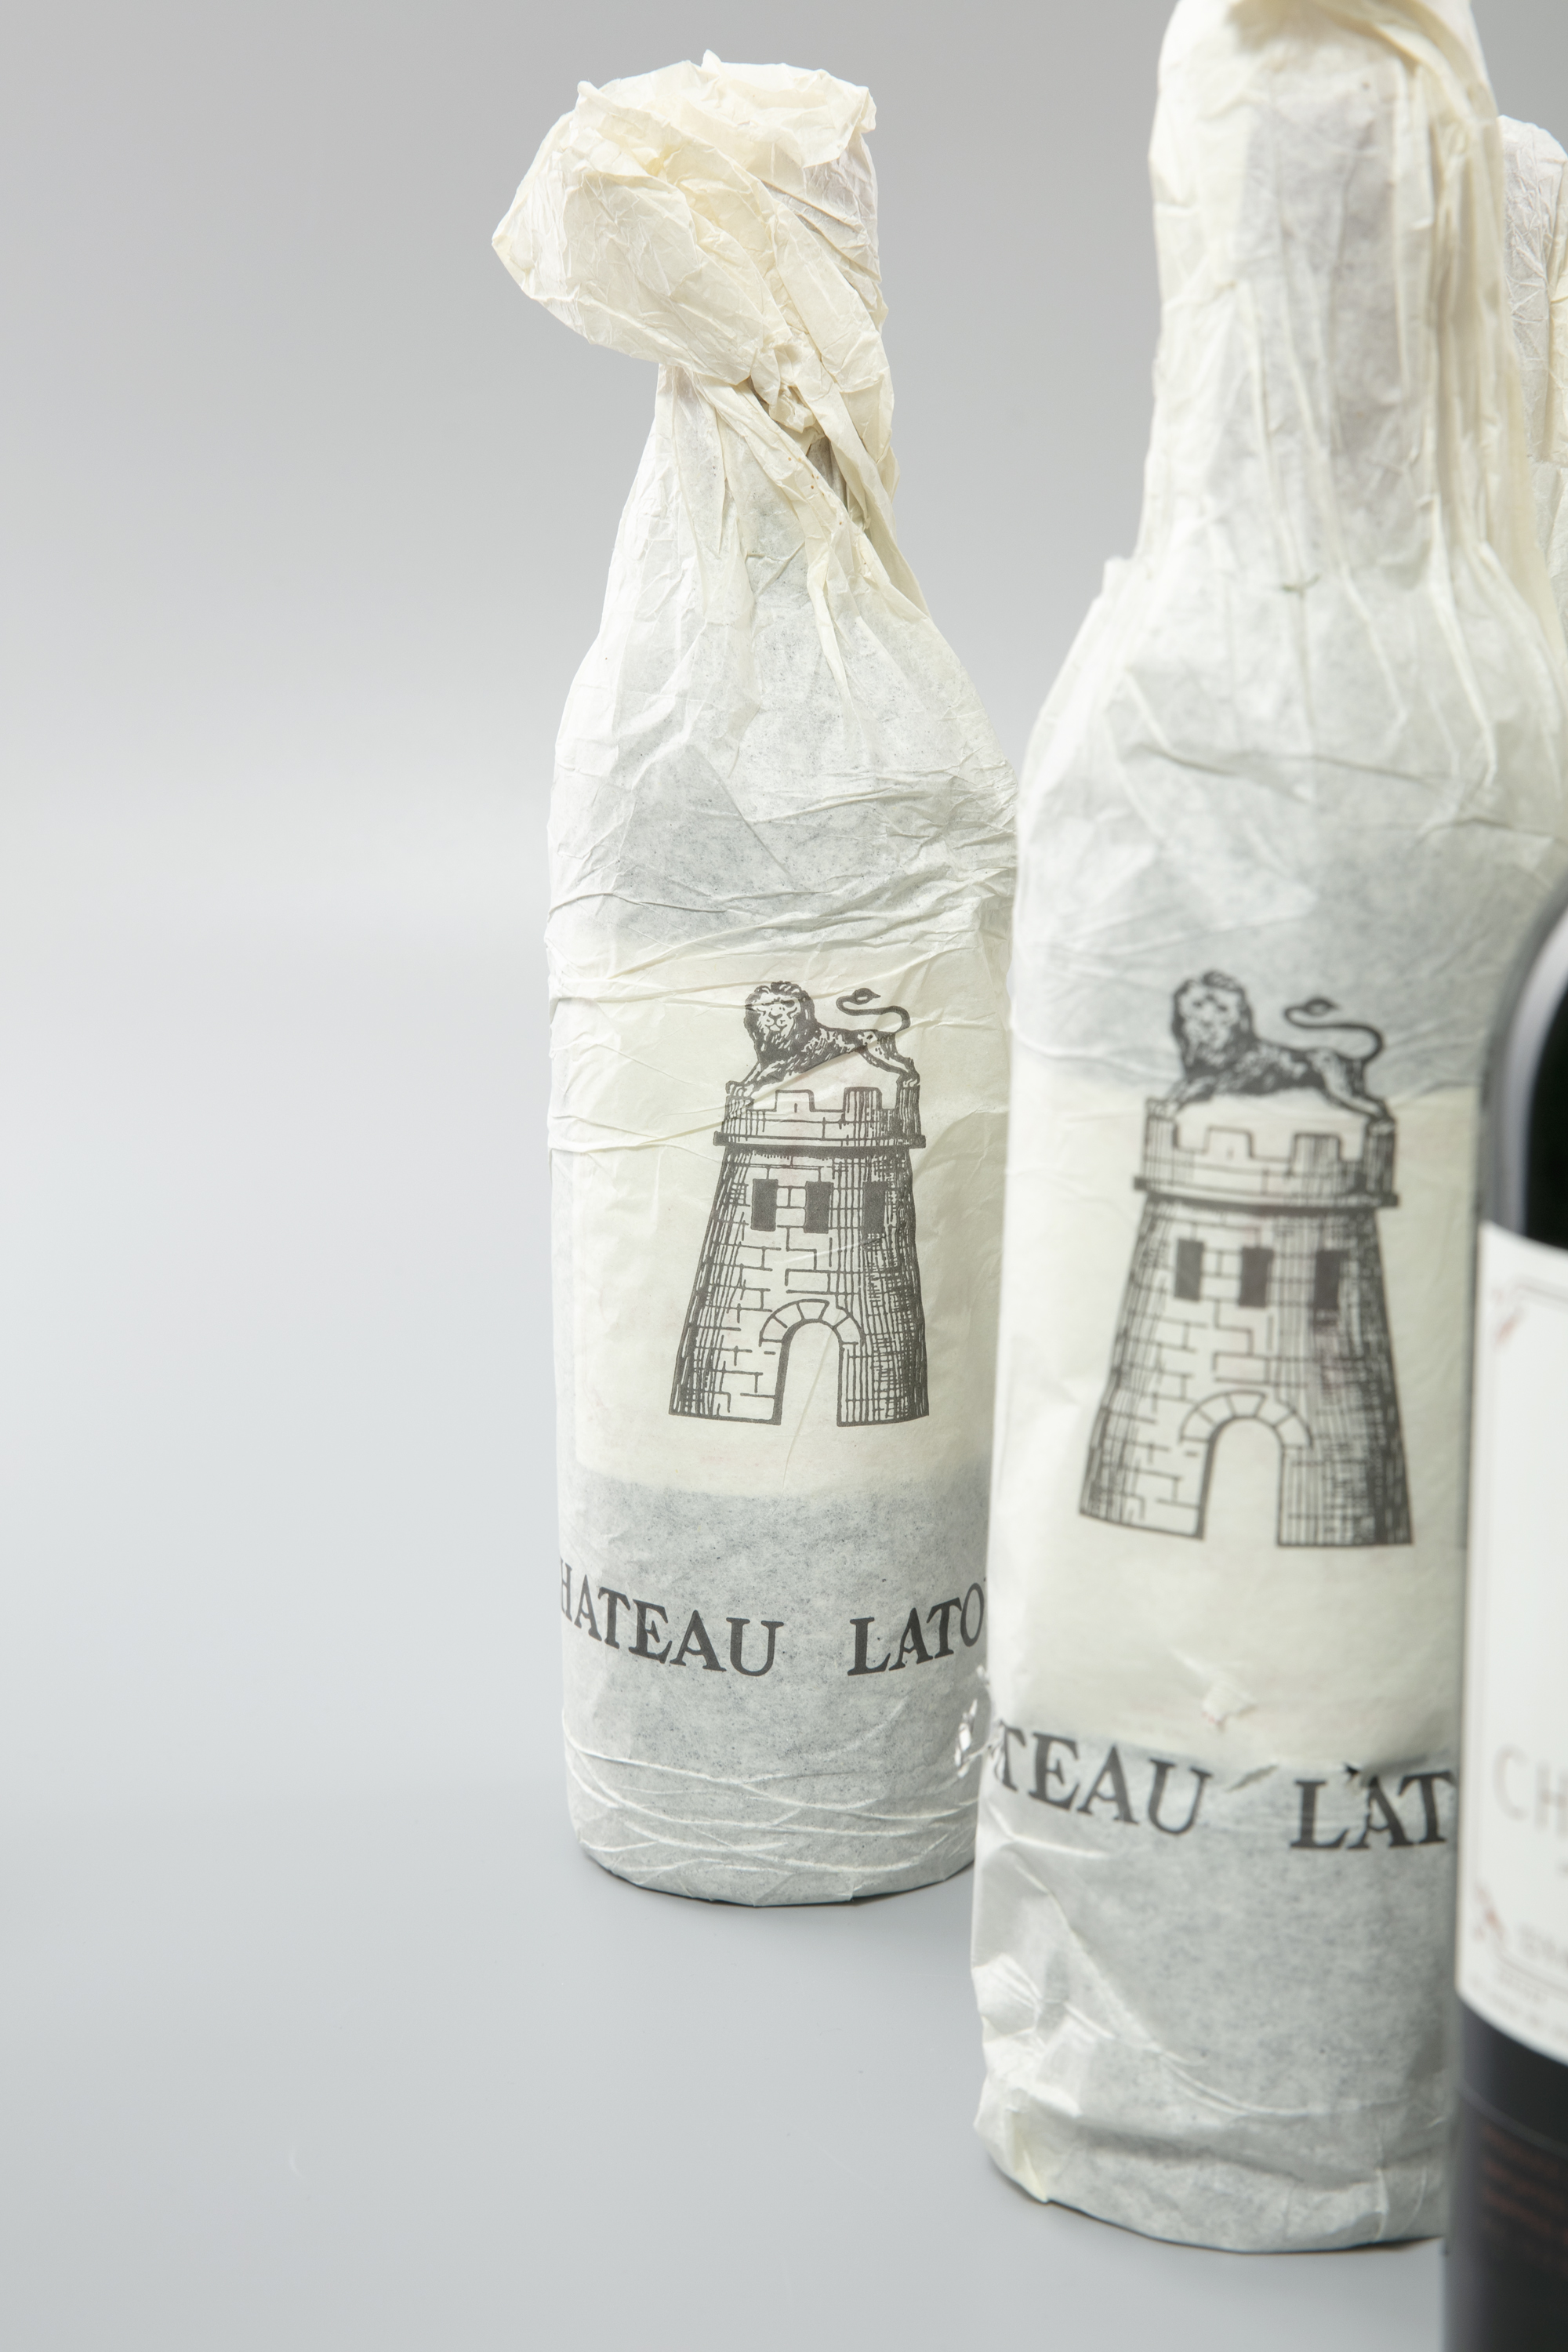 CHATEAU LATOUR Pauillac, 1993 9 bottles - Image 8 of 14